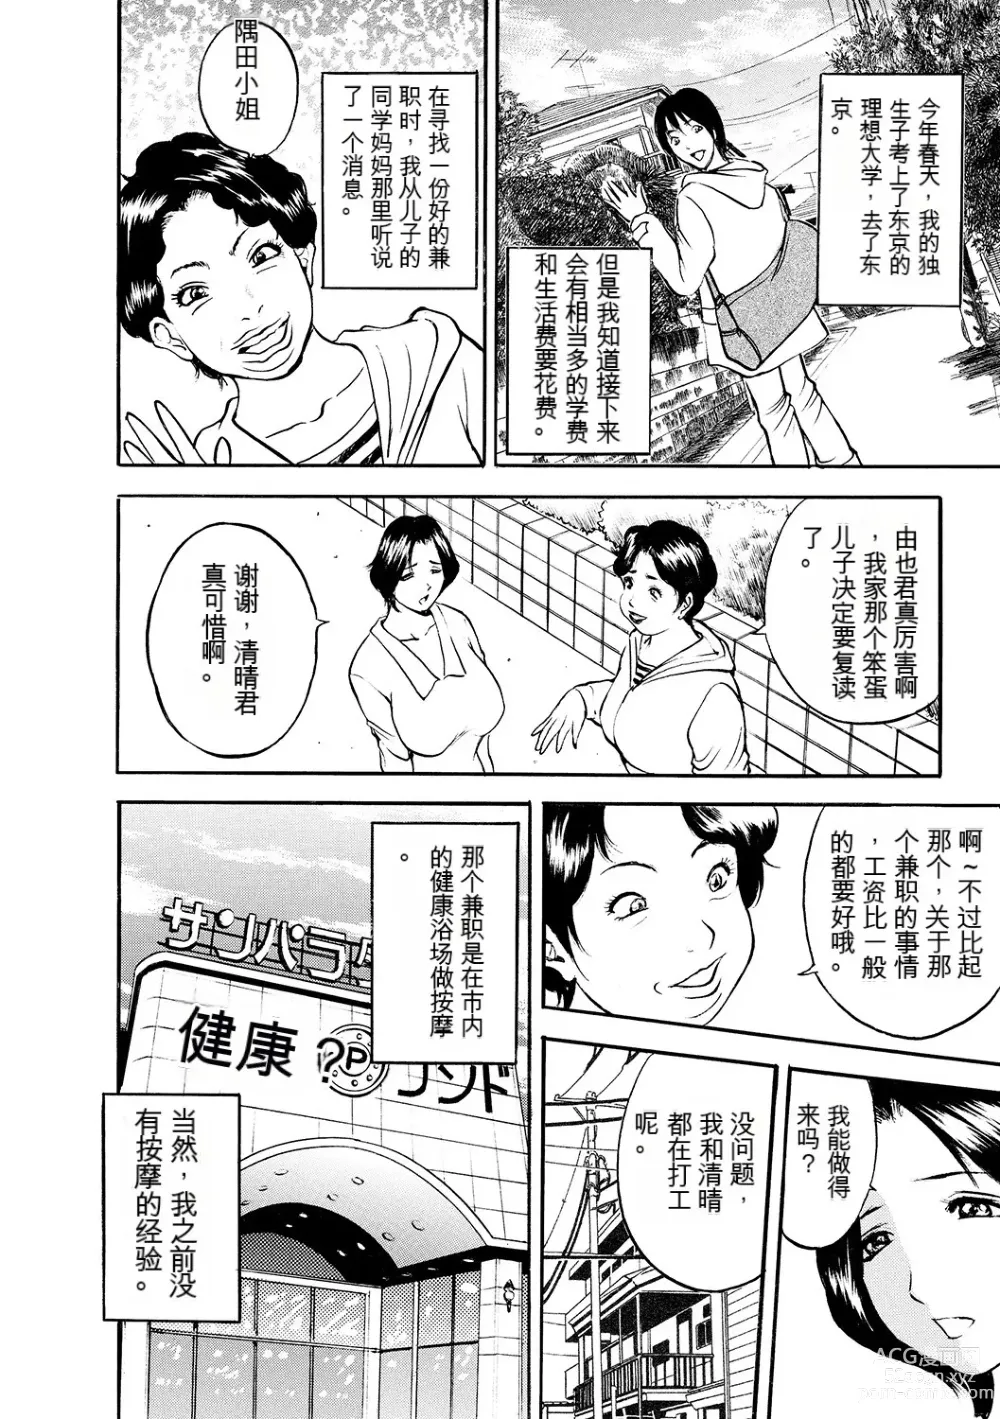 Page 6 of manga 母淫いぢり Boin Ijiri